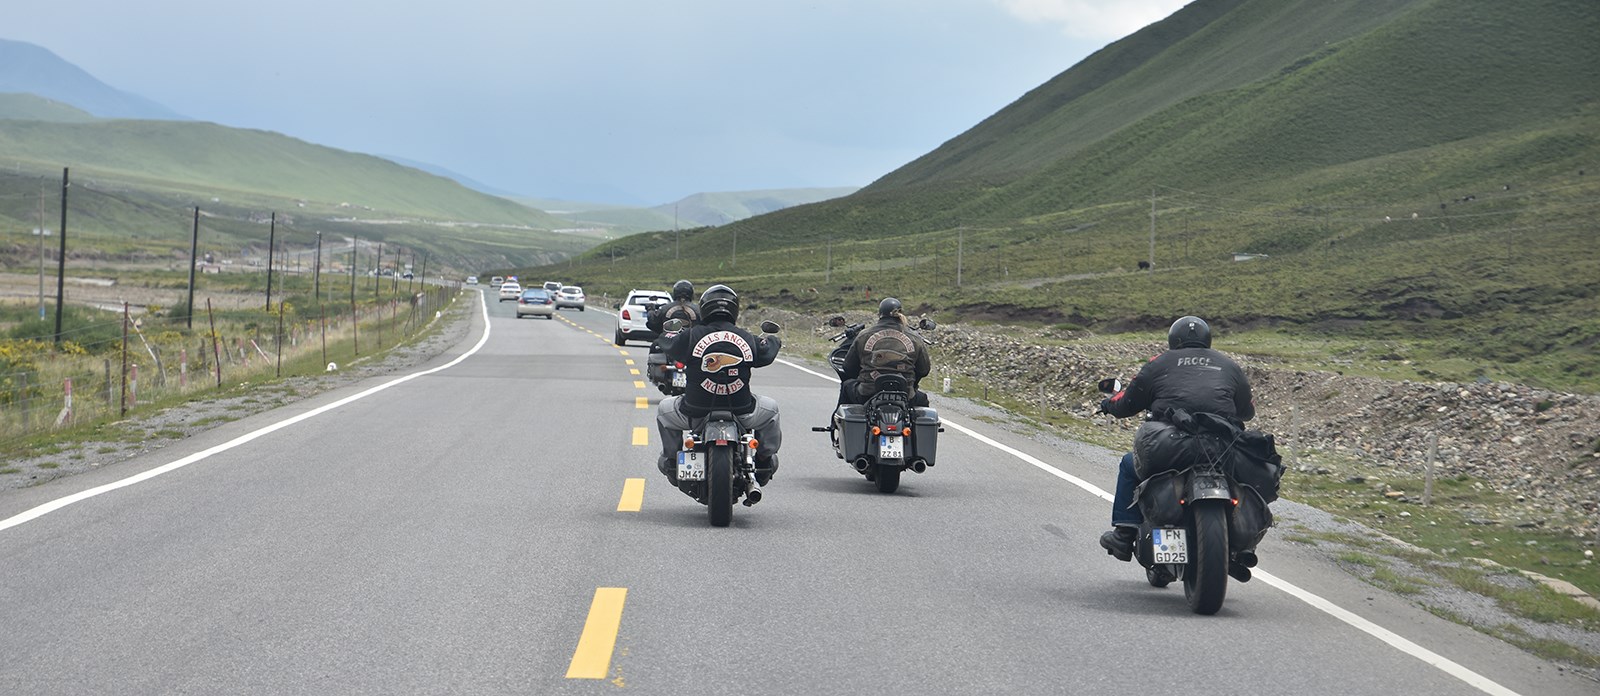 Rental Motorbike Tour from Sichuan via Yunnan to Tibet